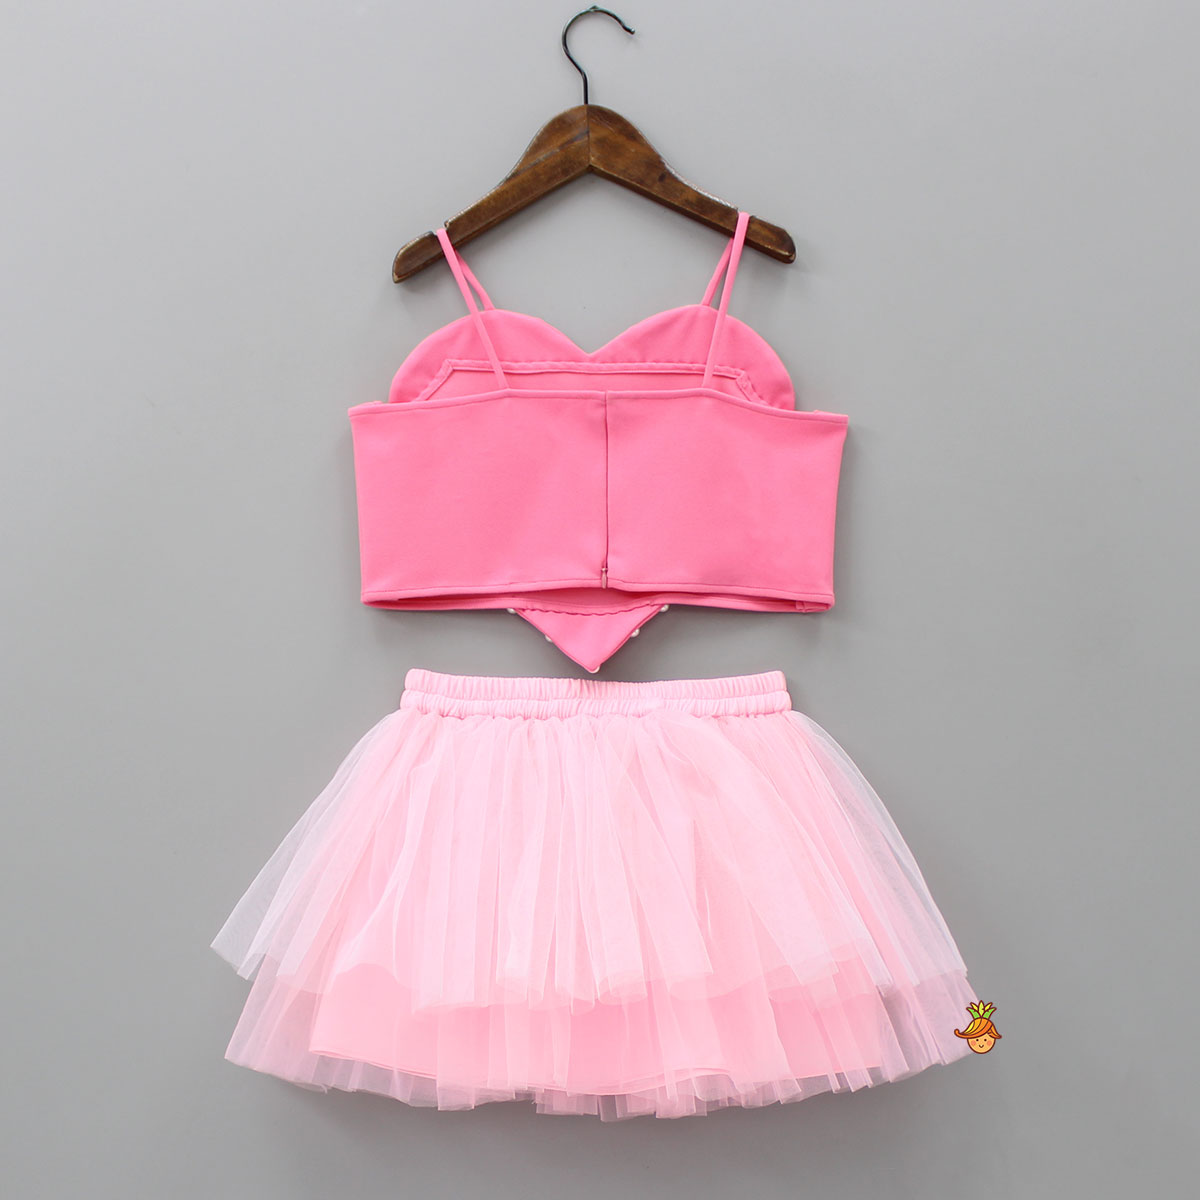 Pre Order: Neoprene Heart Shaped Fancy Flamingo Pink Crop Top And